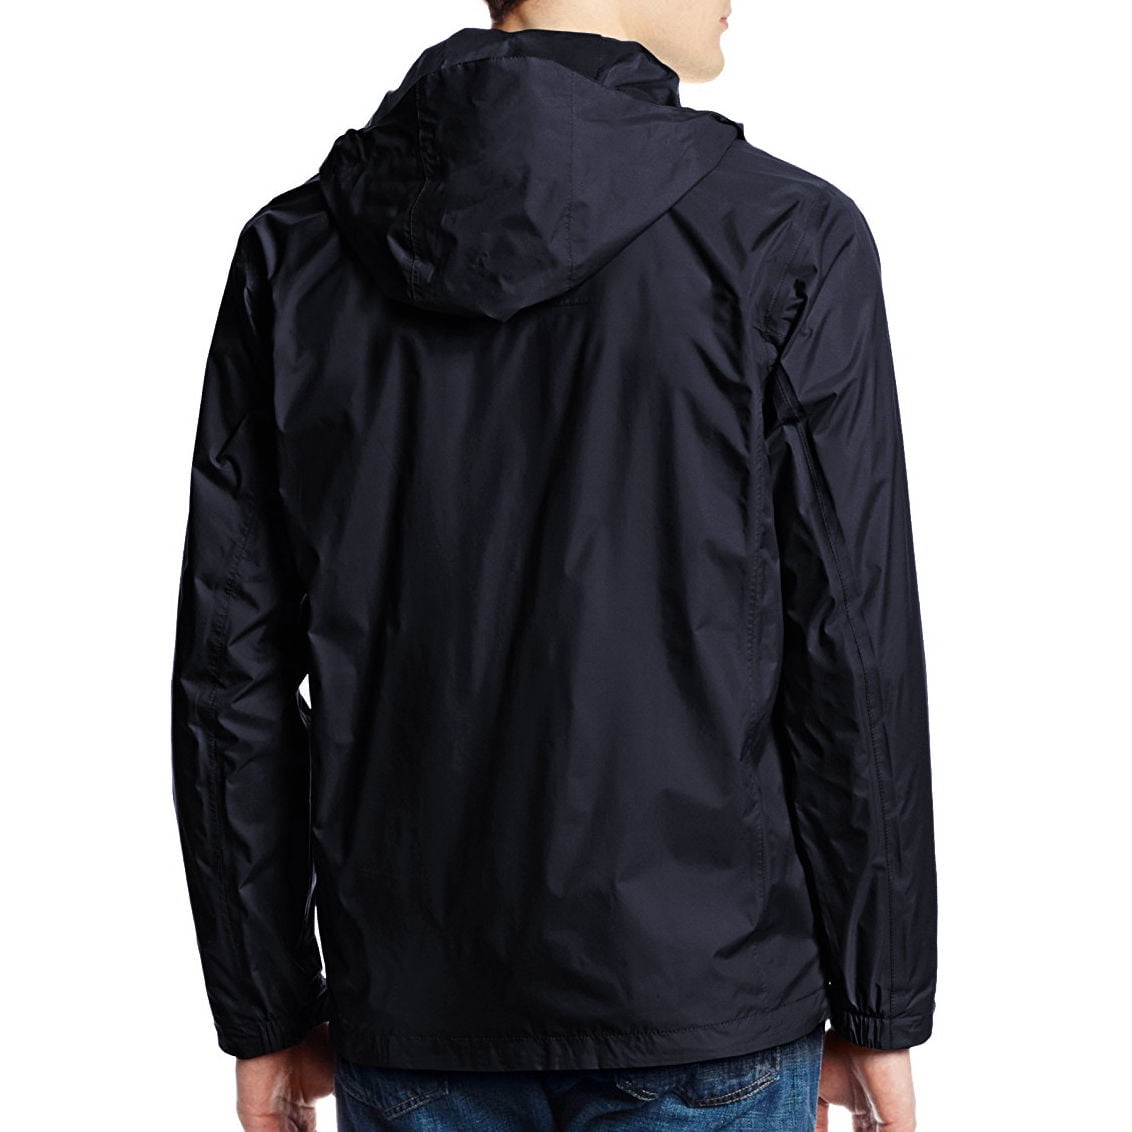 Maximos Men's Water Resistant Windbreaker Rain Jacket